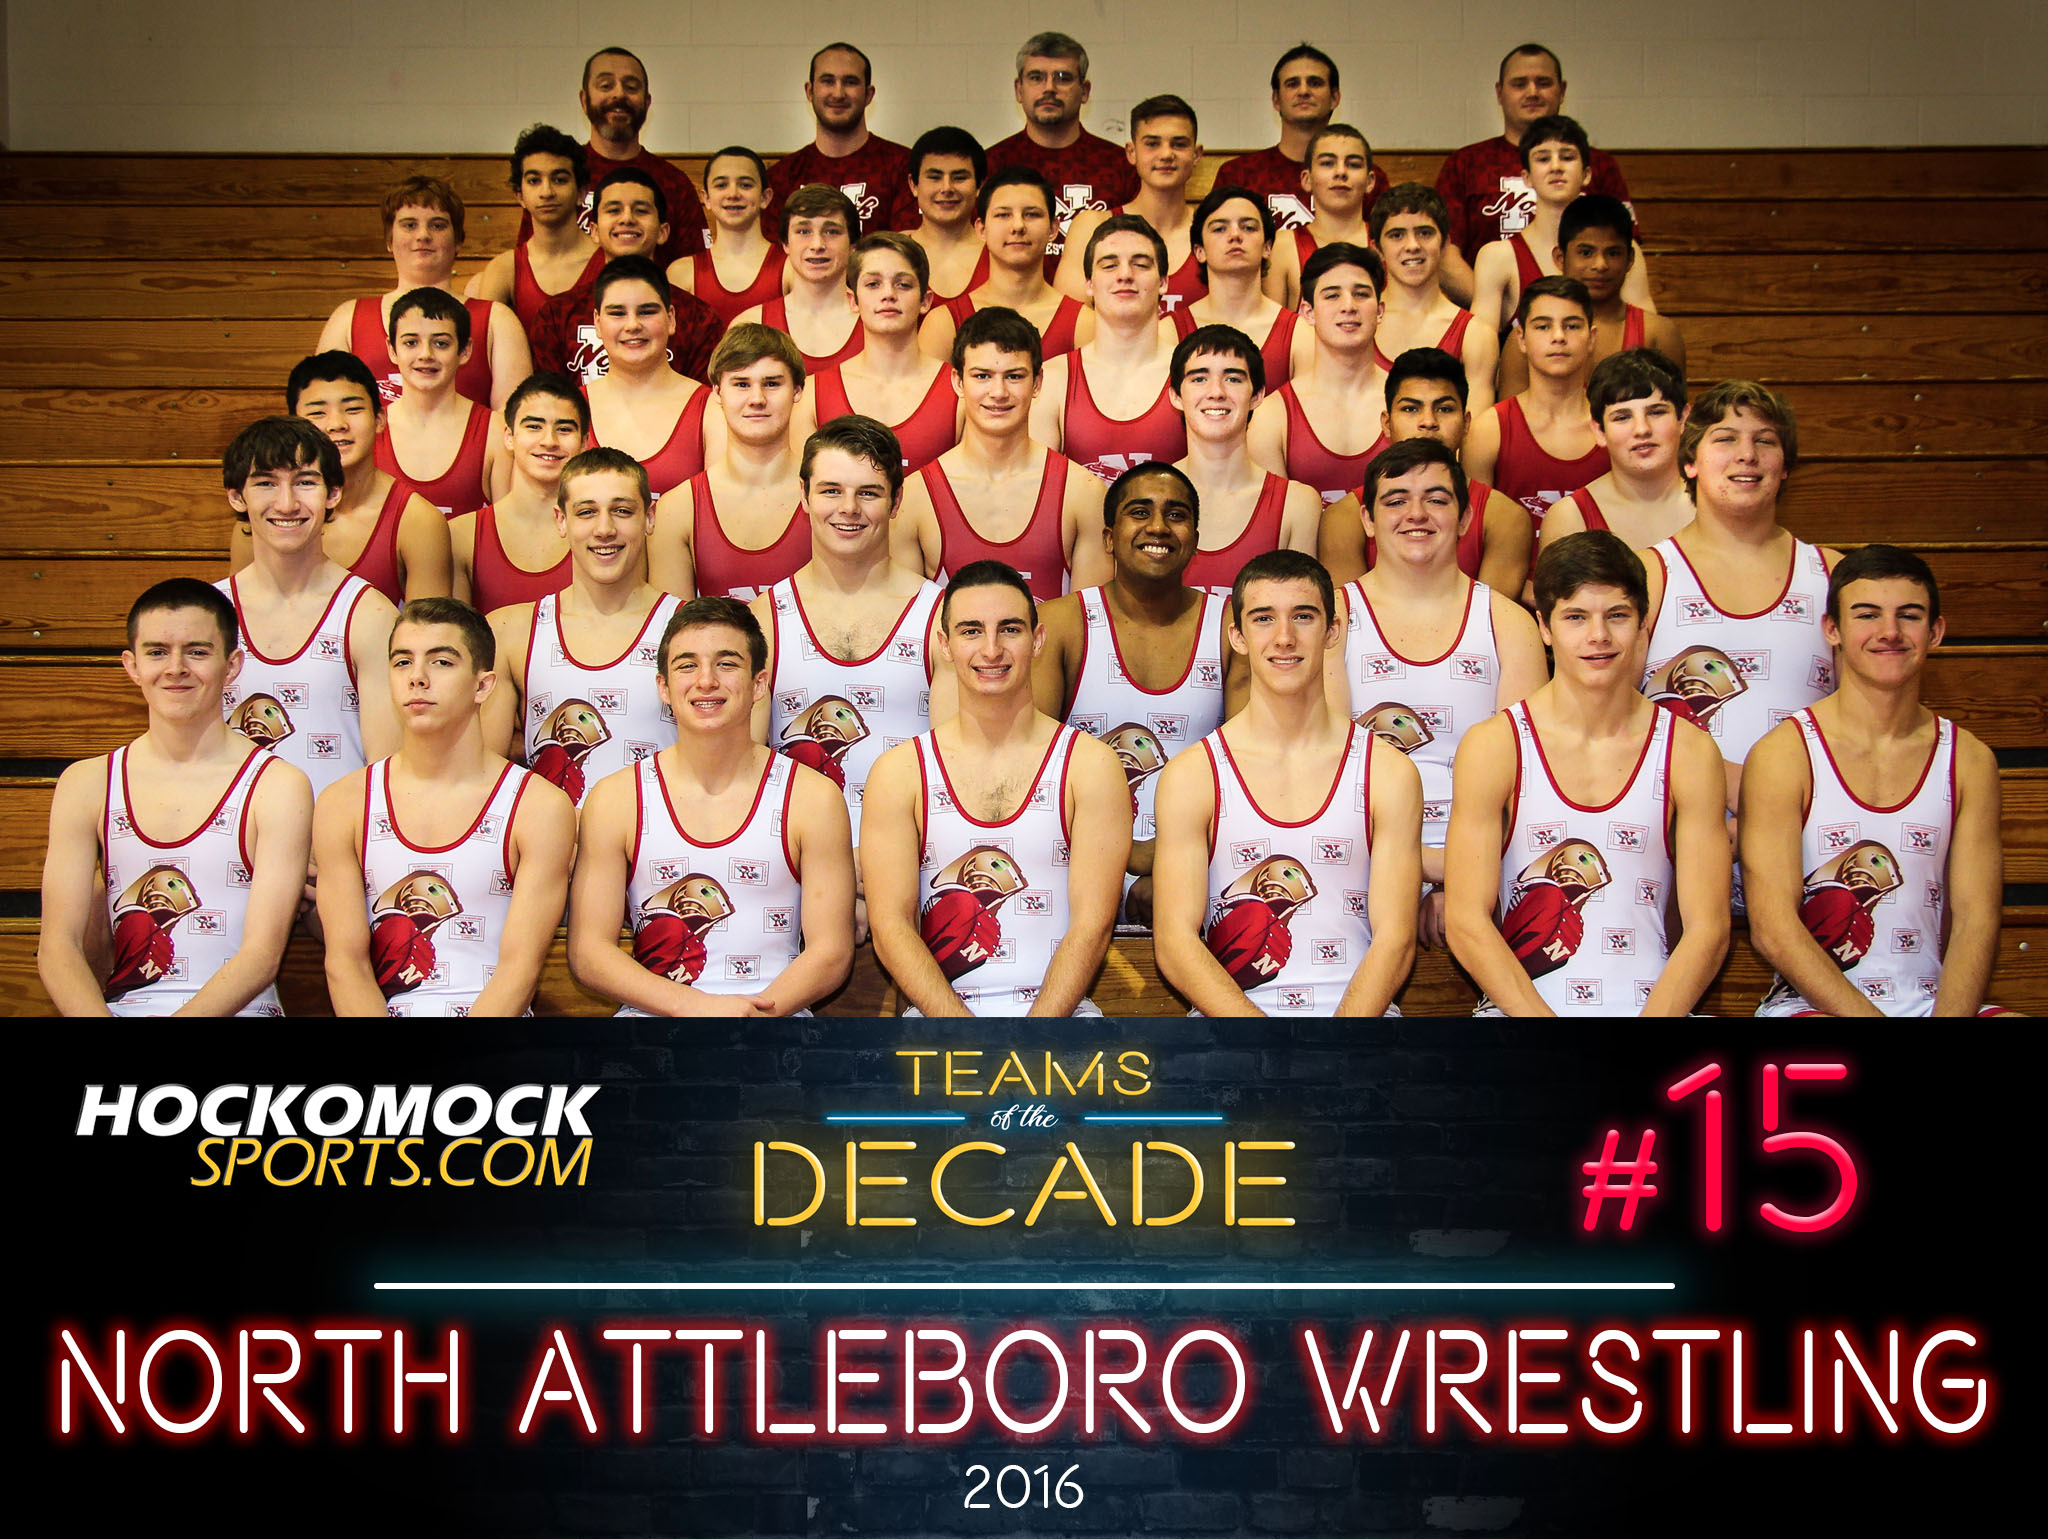 North Attleboro wrestling